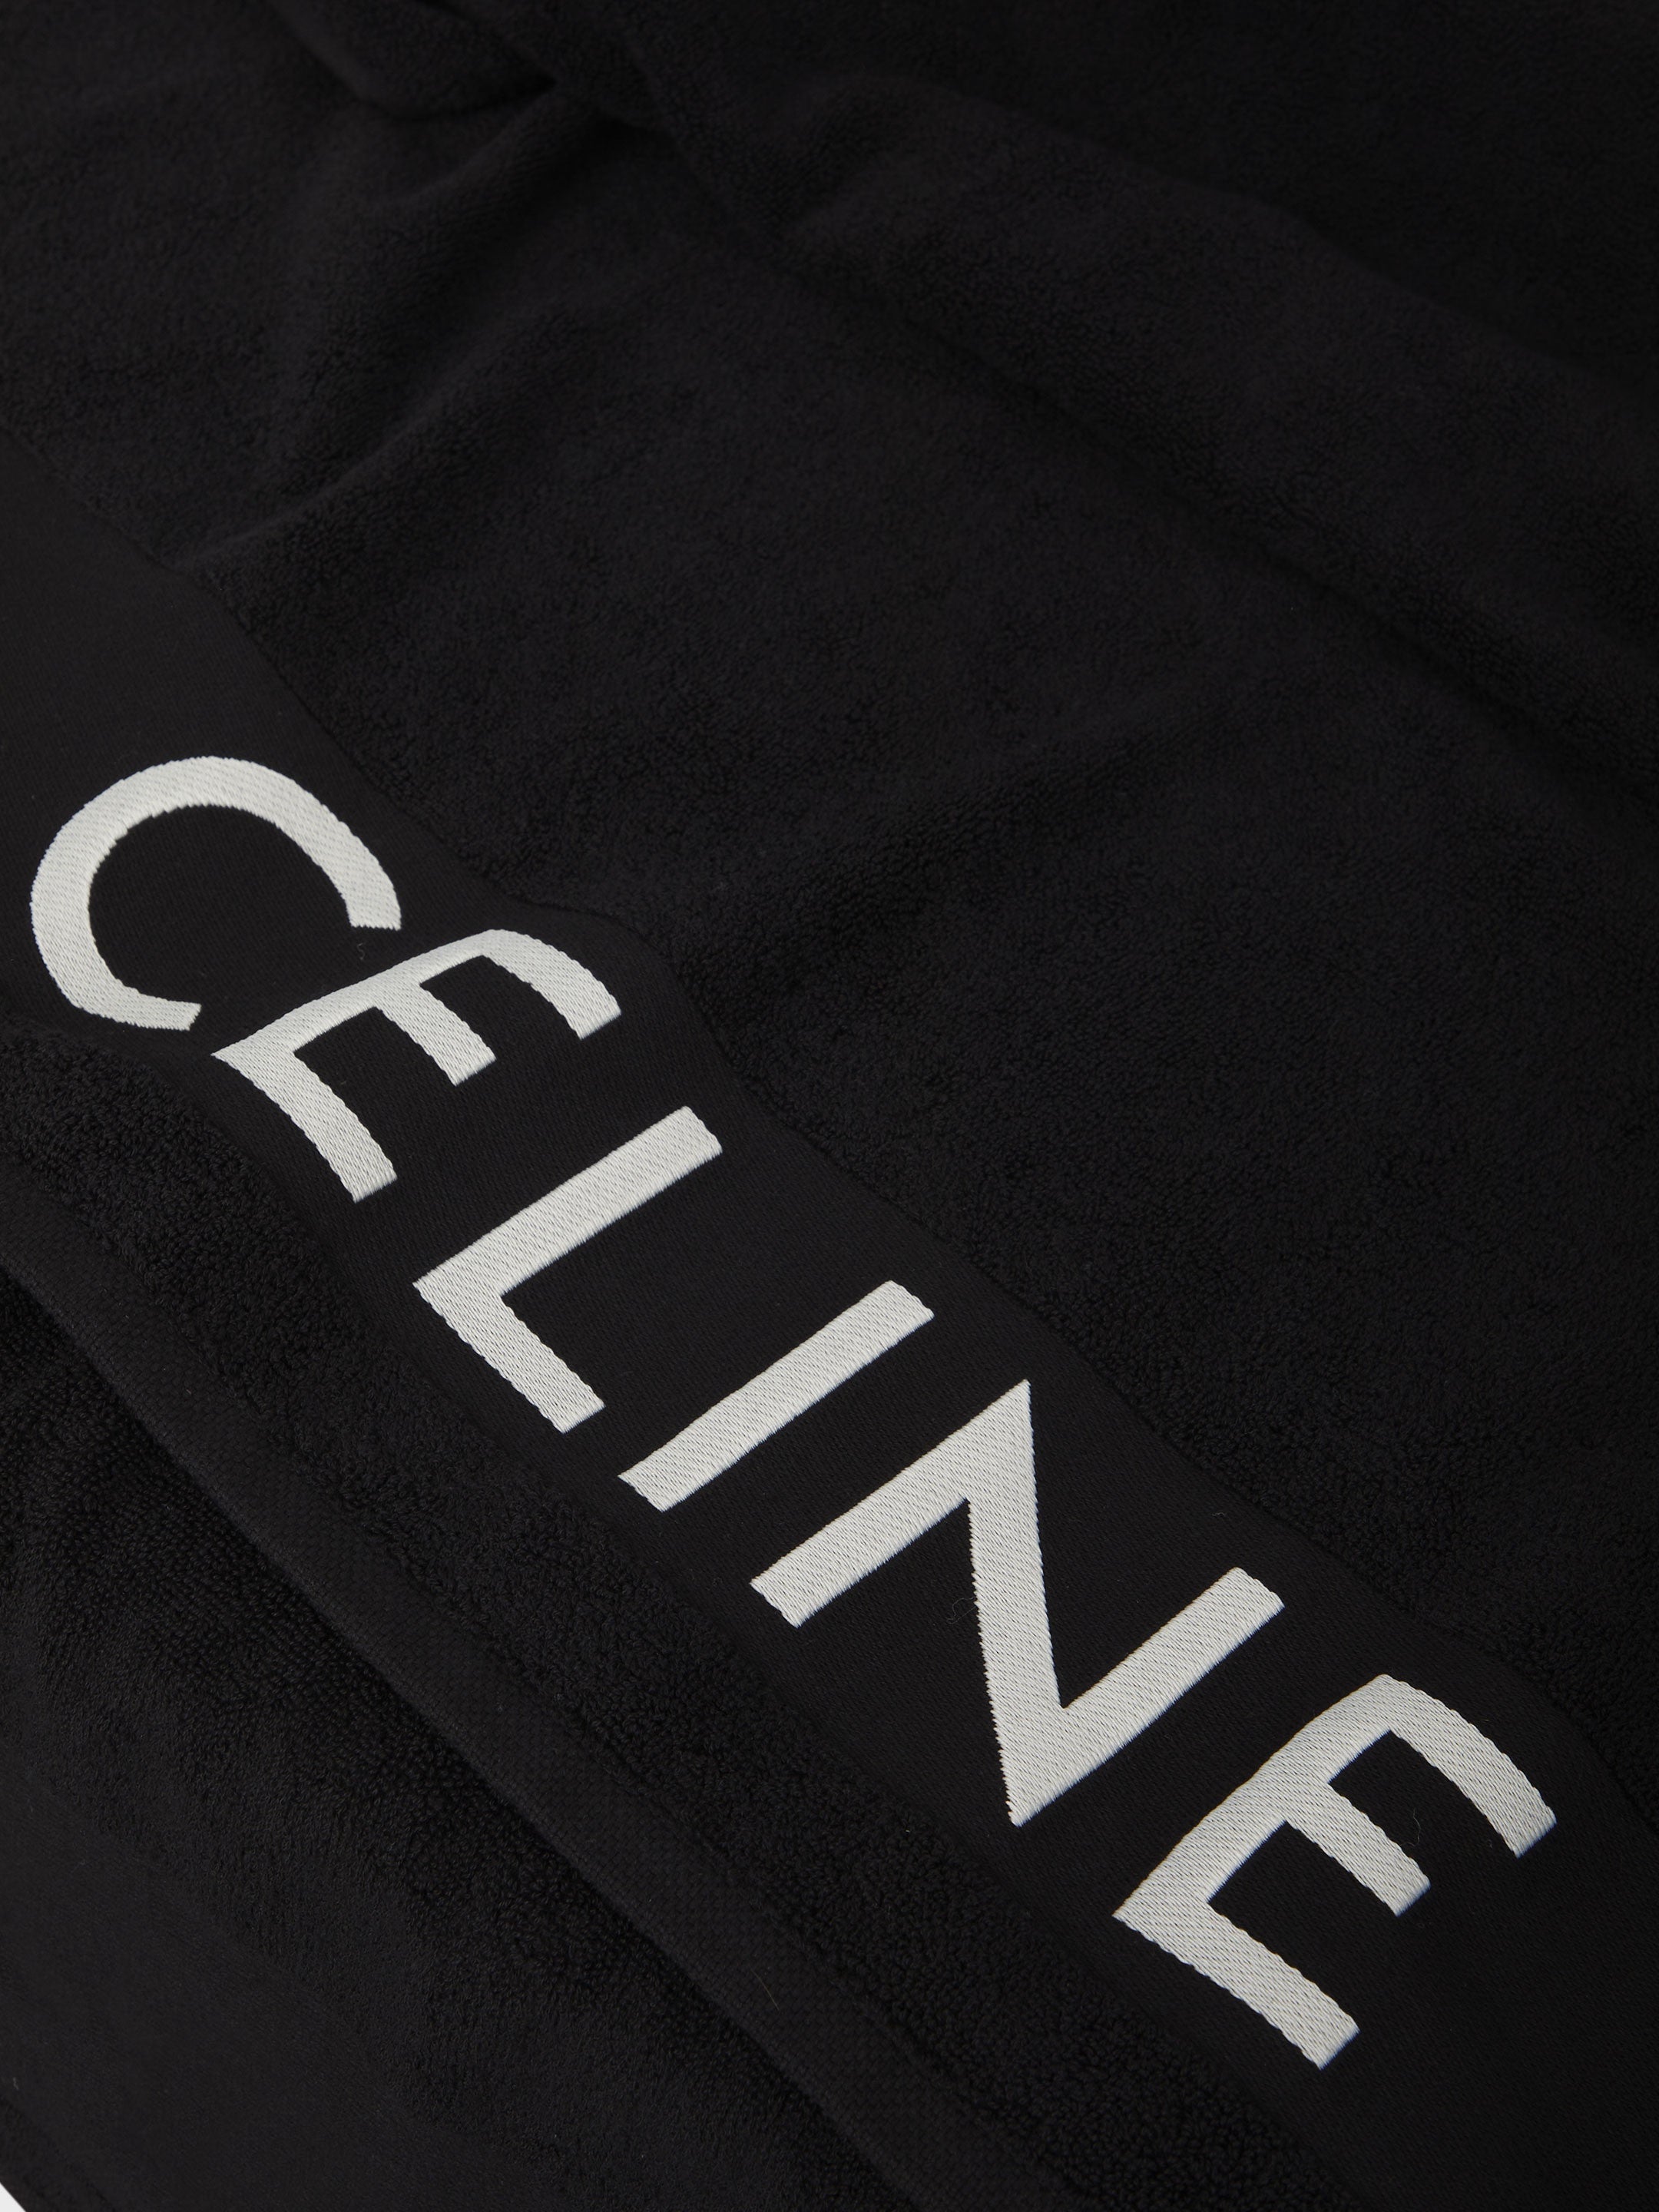 Celine beach towel